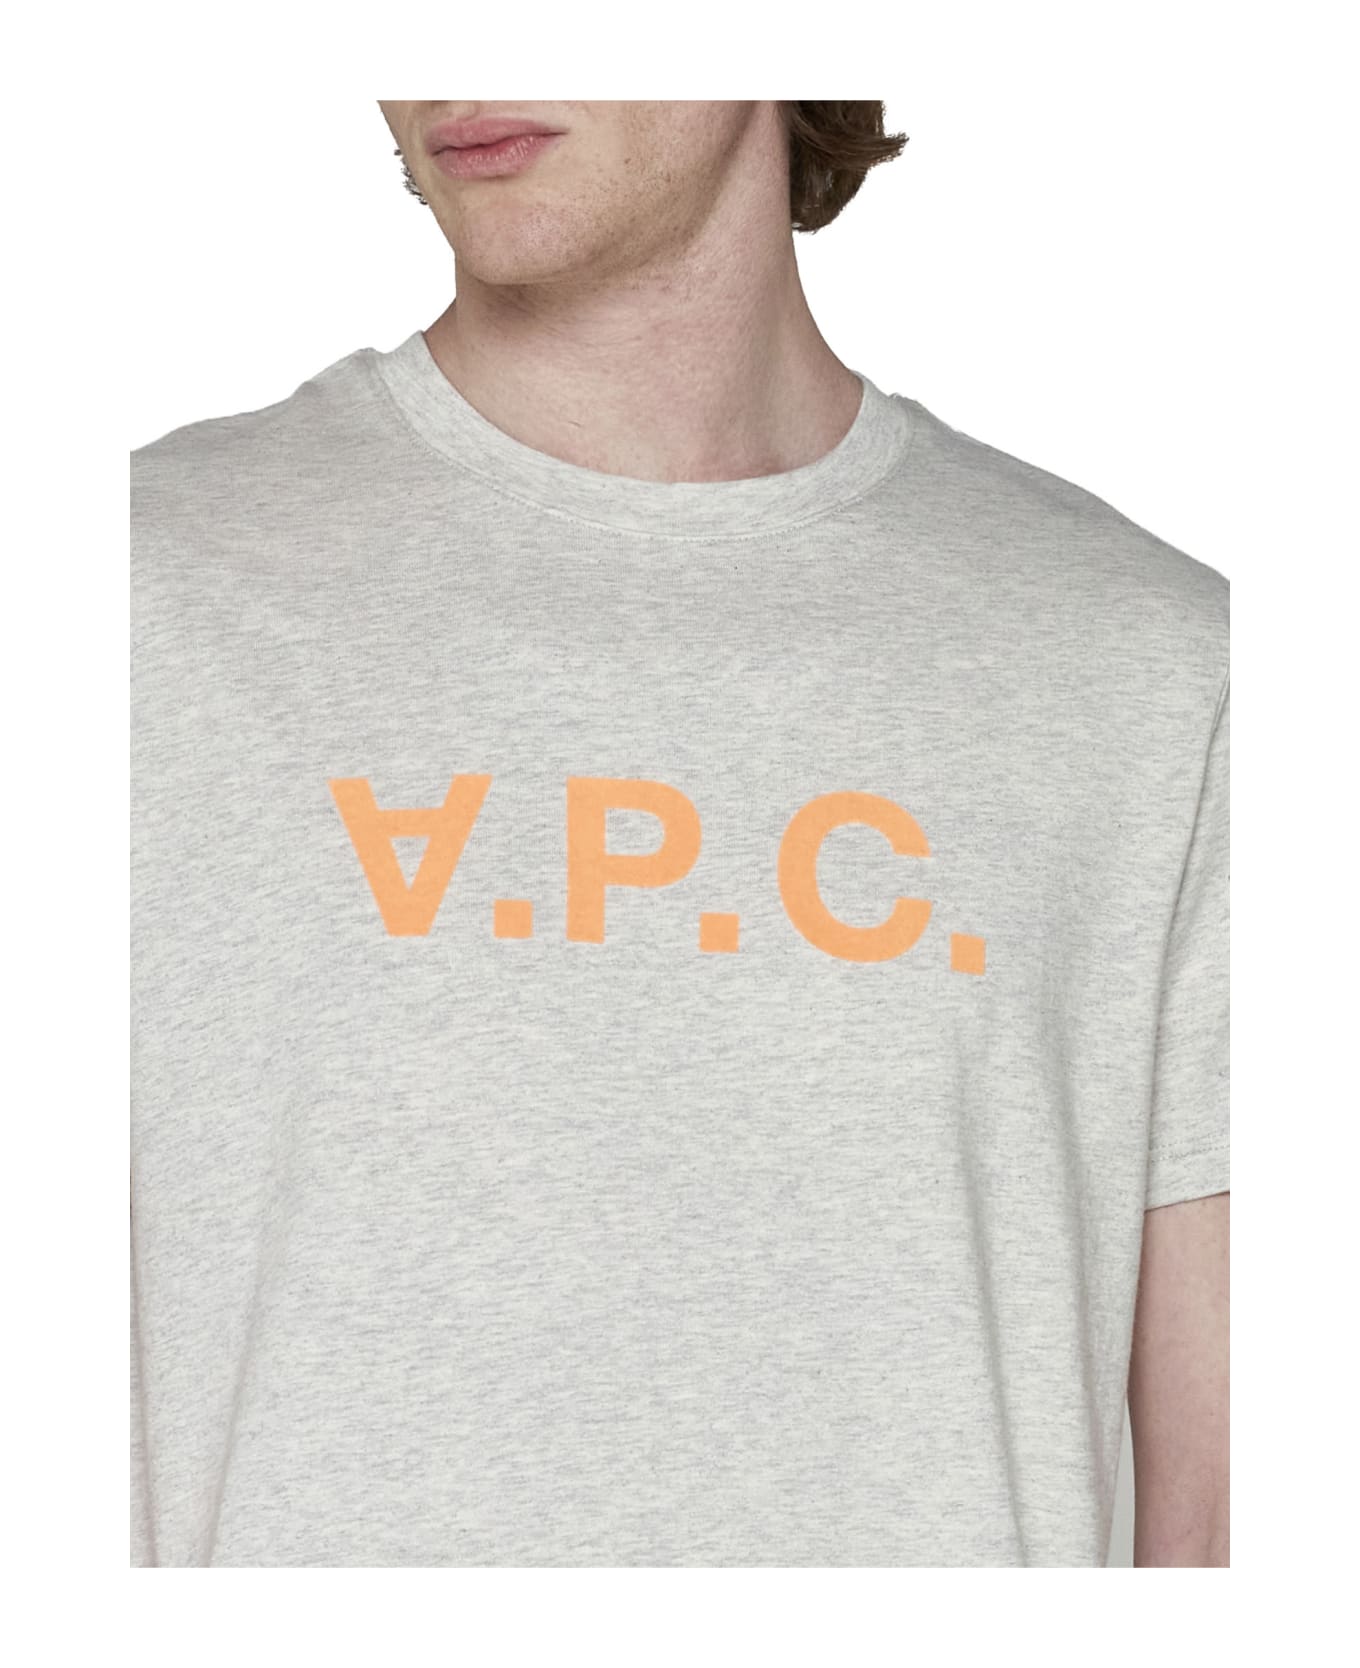 A.P.C. T-shirt With V.p.c Logo - Ecru chine orange